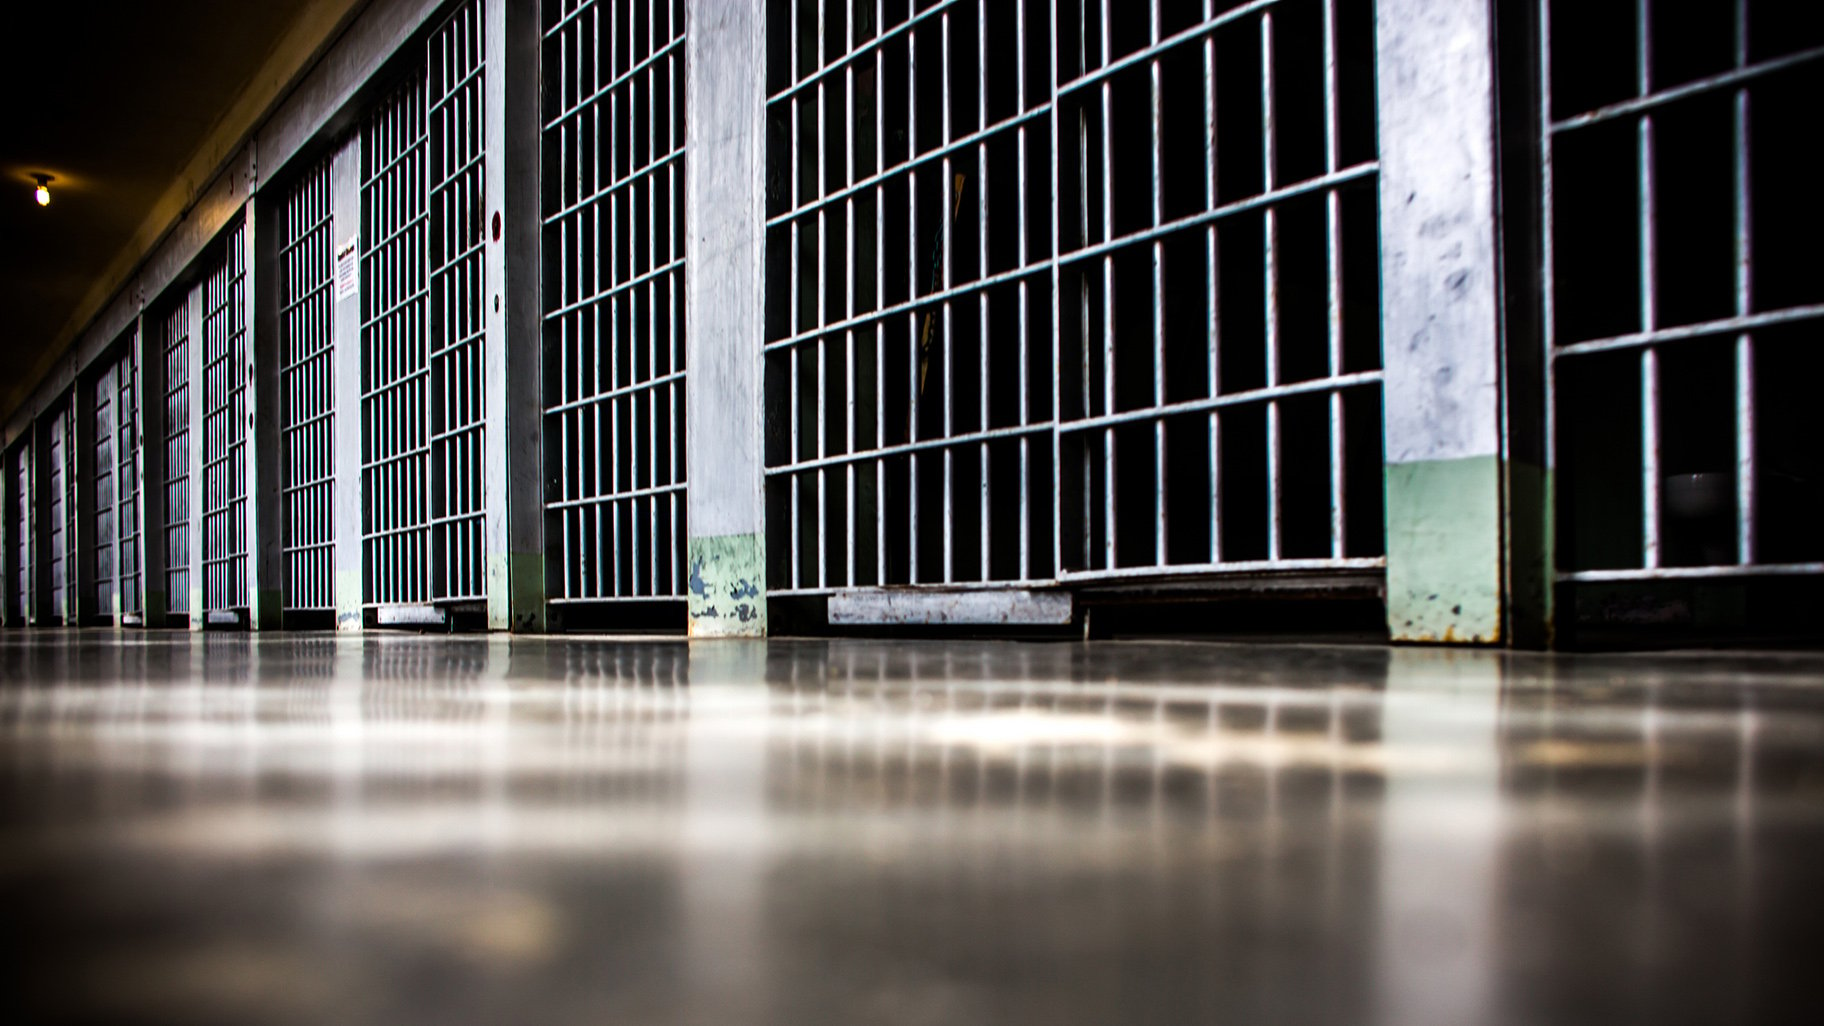 Mom Son Bathuroom Rape Sex Videos - Lawsuit: Female Prisoner Says She Was Raped by Transgender Inmate | Chicago  News | WTTW